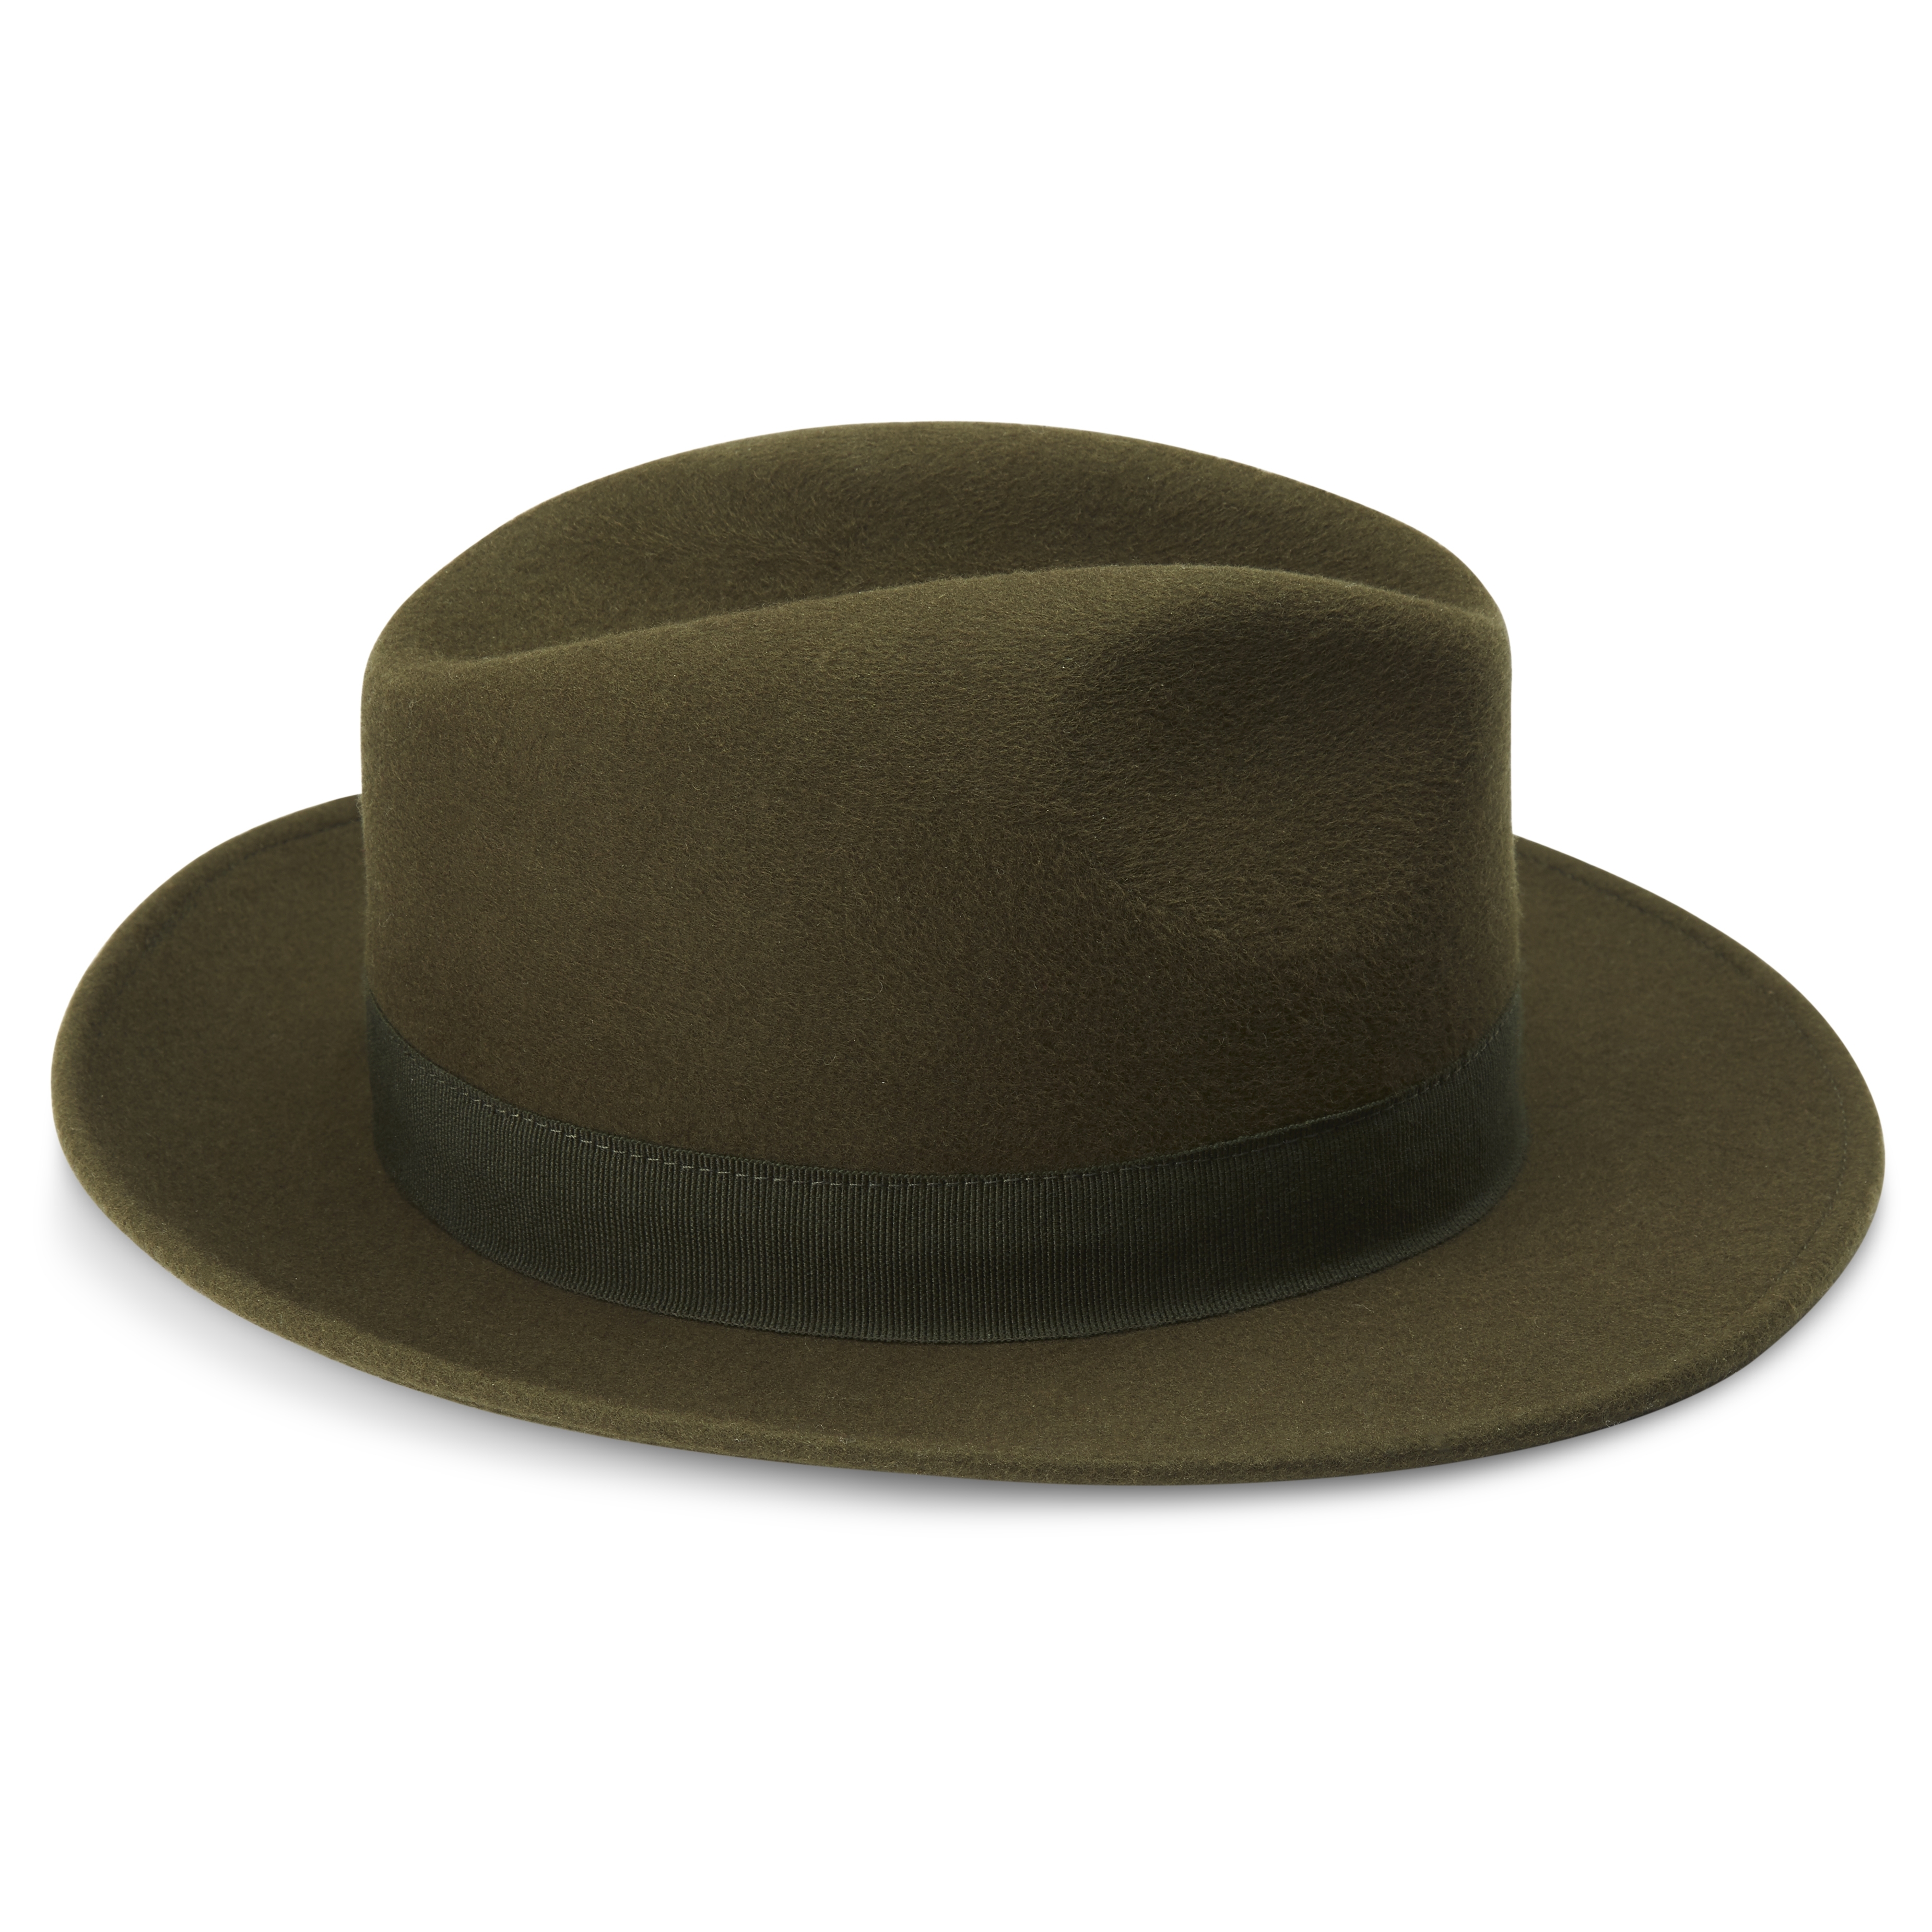 Buy Online - Fedora Hat Band Olive Green - Fancy Fedora